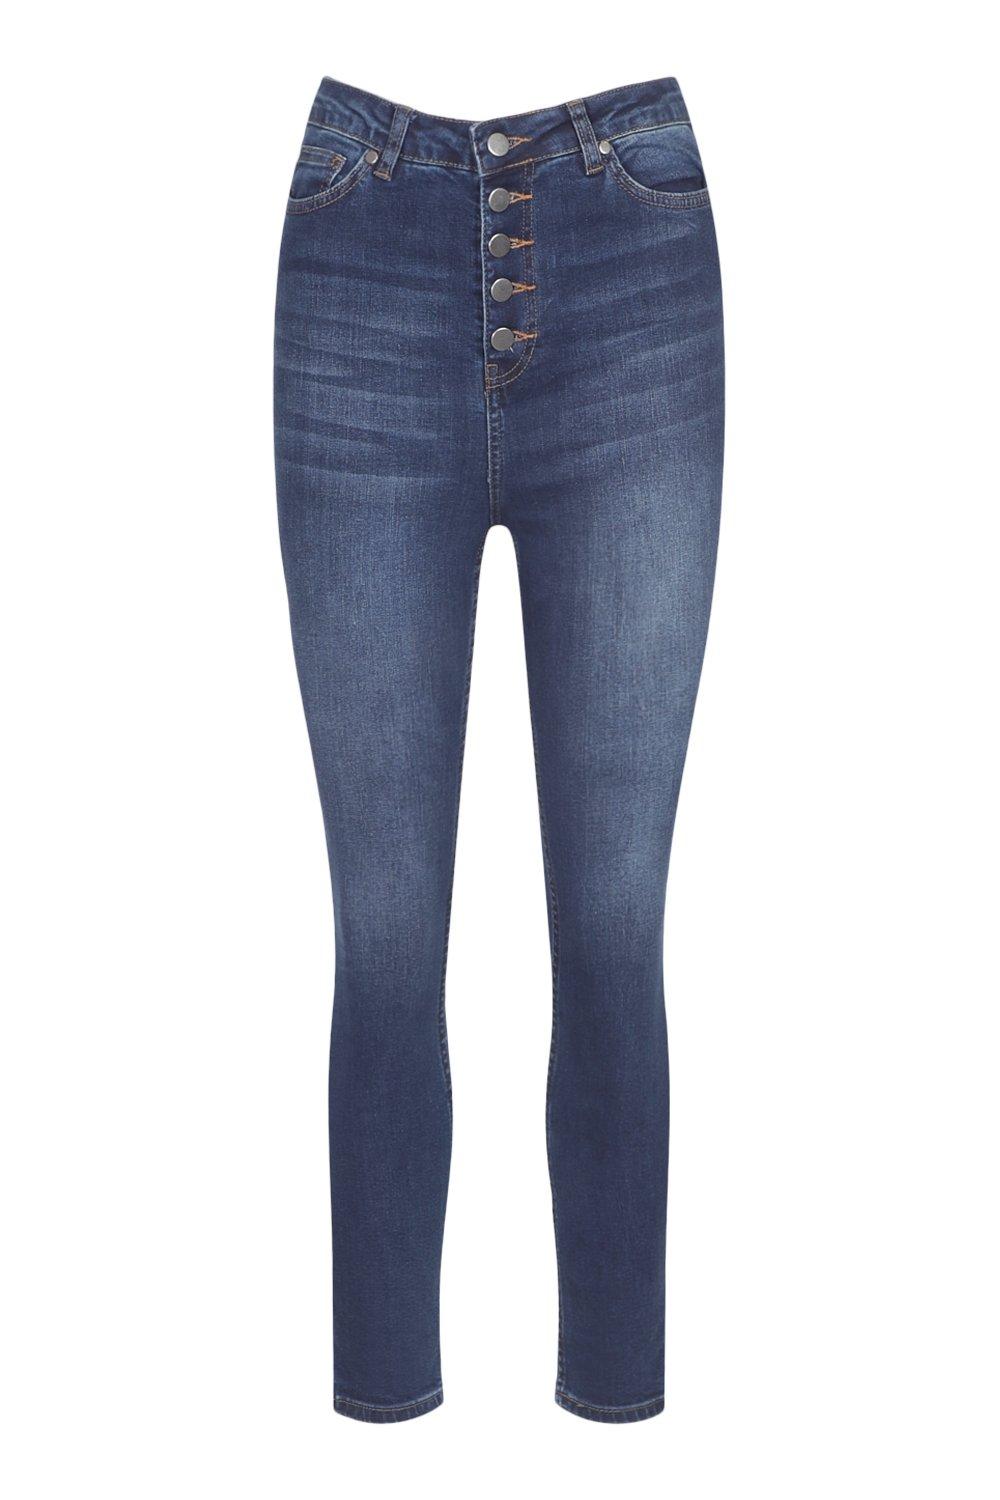 Mode Spijkerbroeken Hoge taille jeans boohoo blue Hoge taille jeans zwart casual uitstraling 